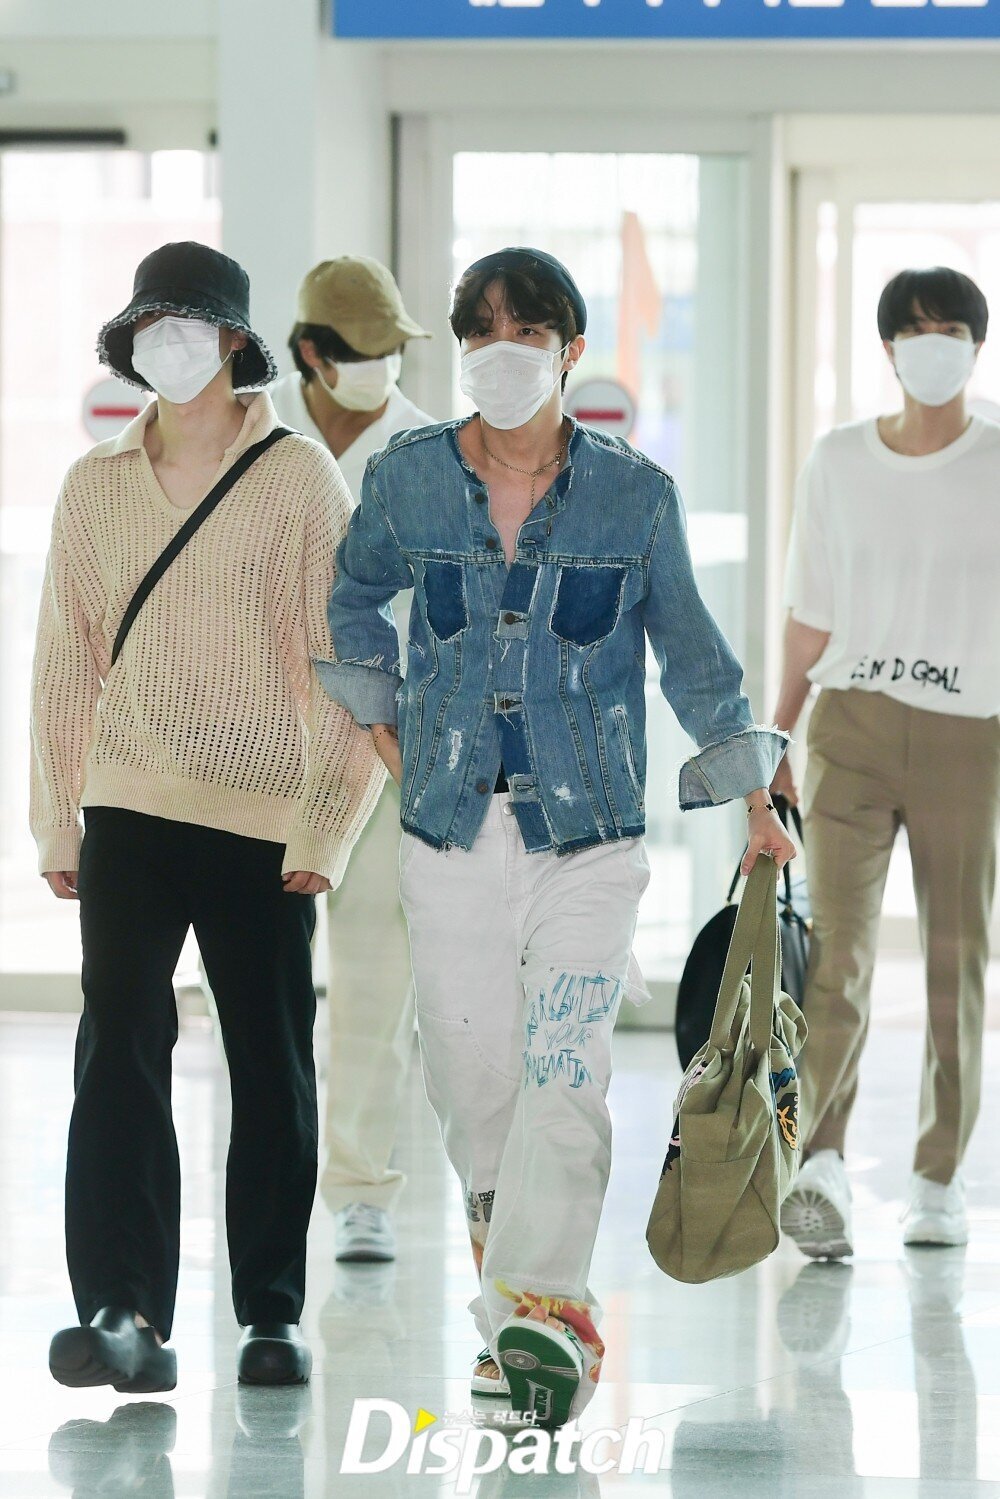 J-Hope ❤ BTS at Incheon airport heading to Nagoya, Japan #BTS